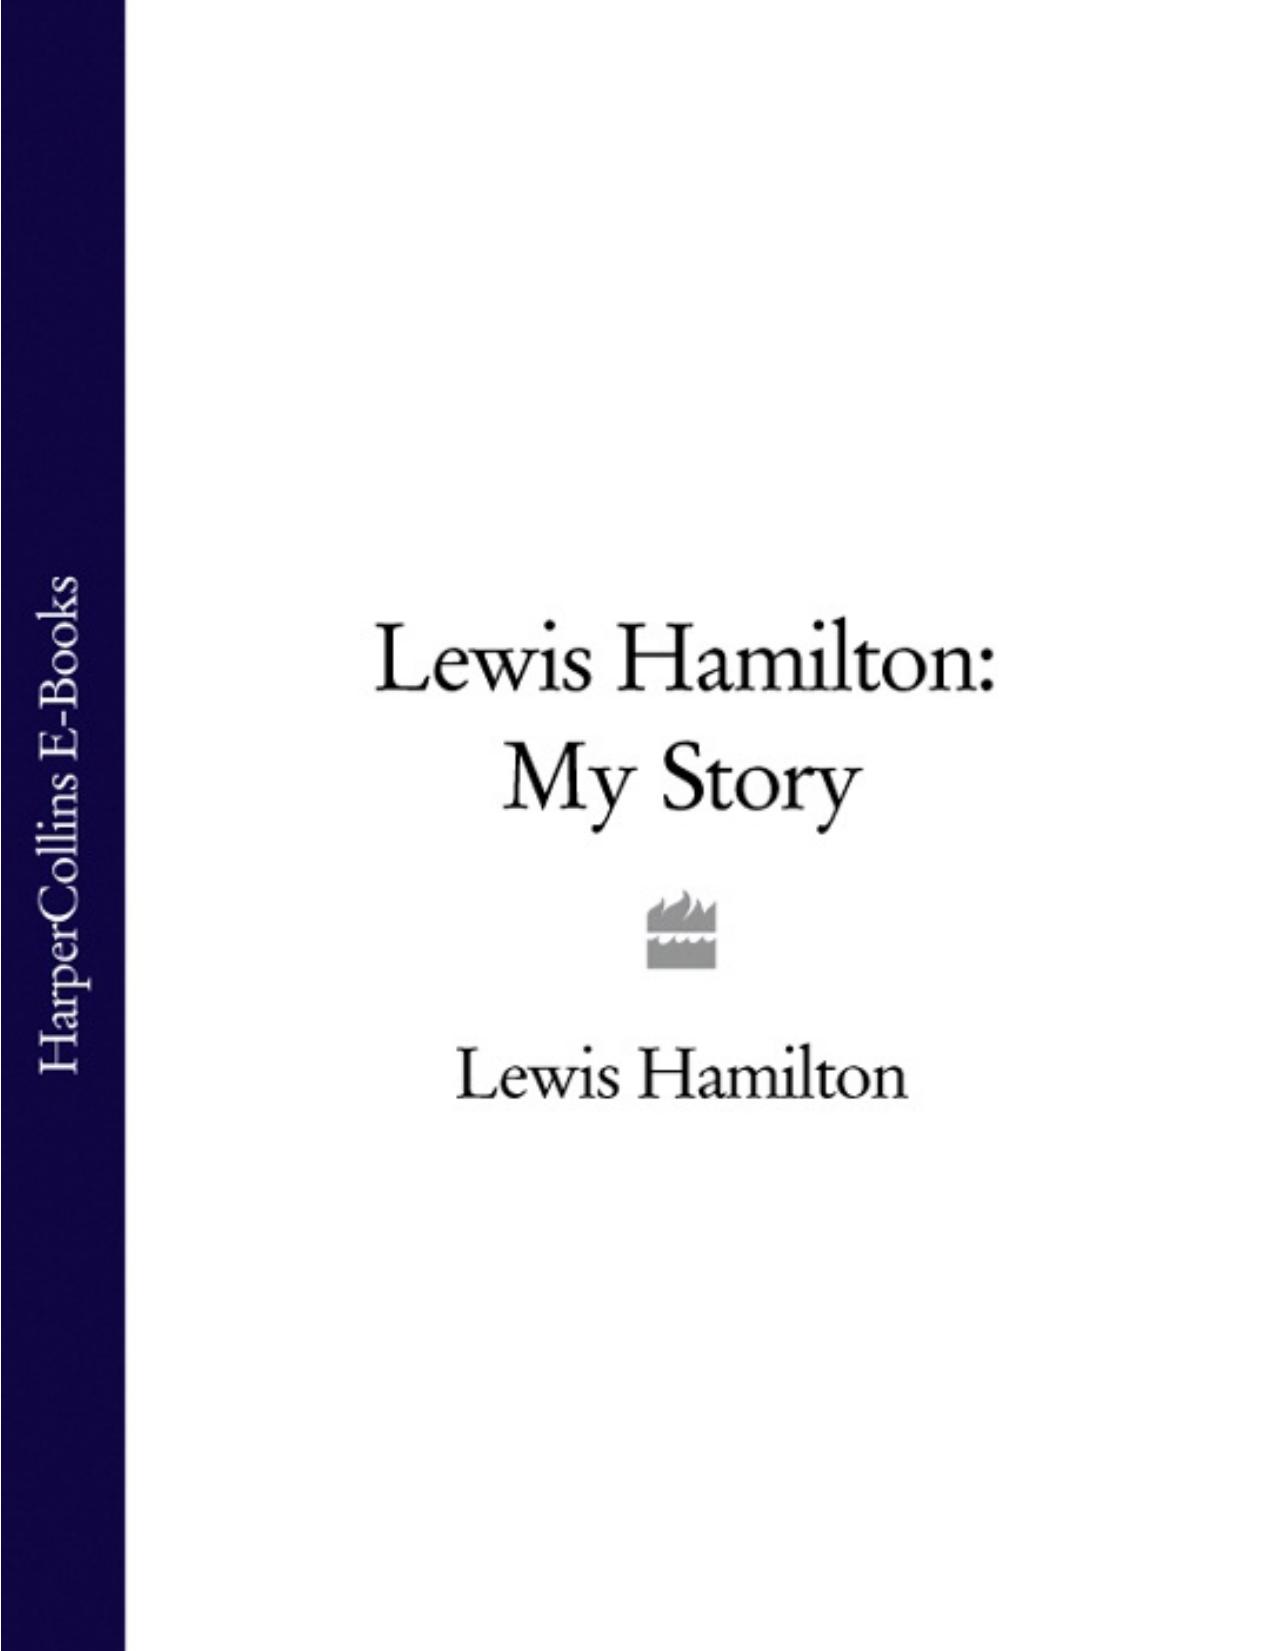 Lewis Hamilton: My Story by Lewis Hamilton